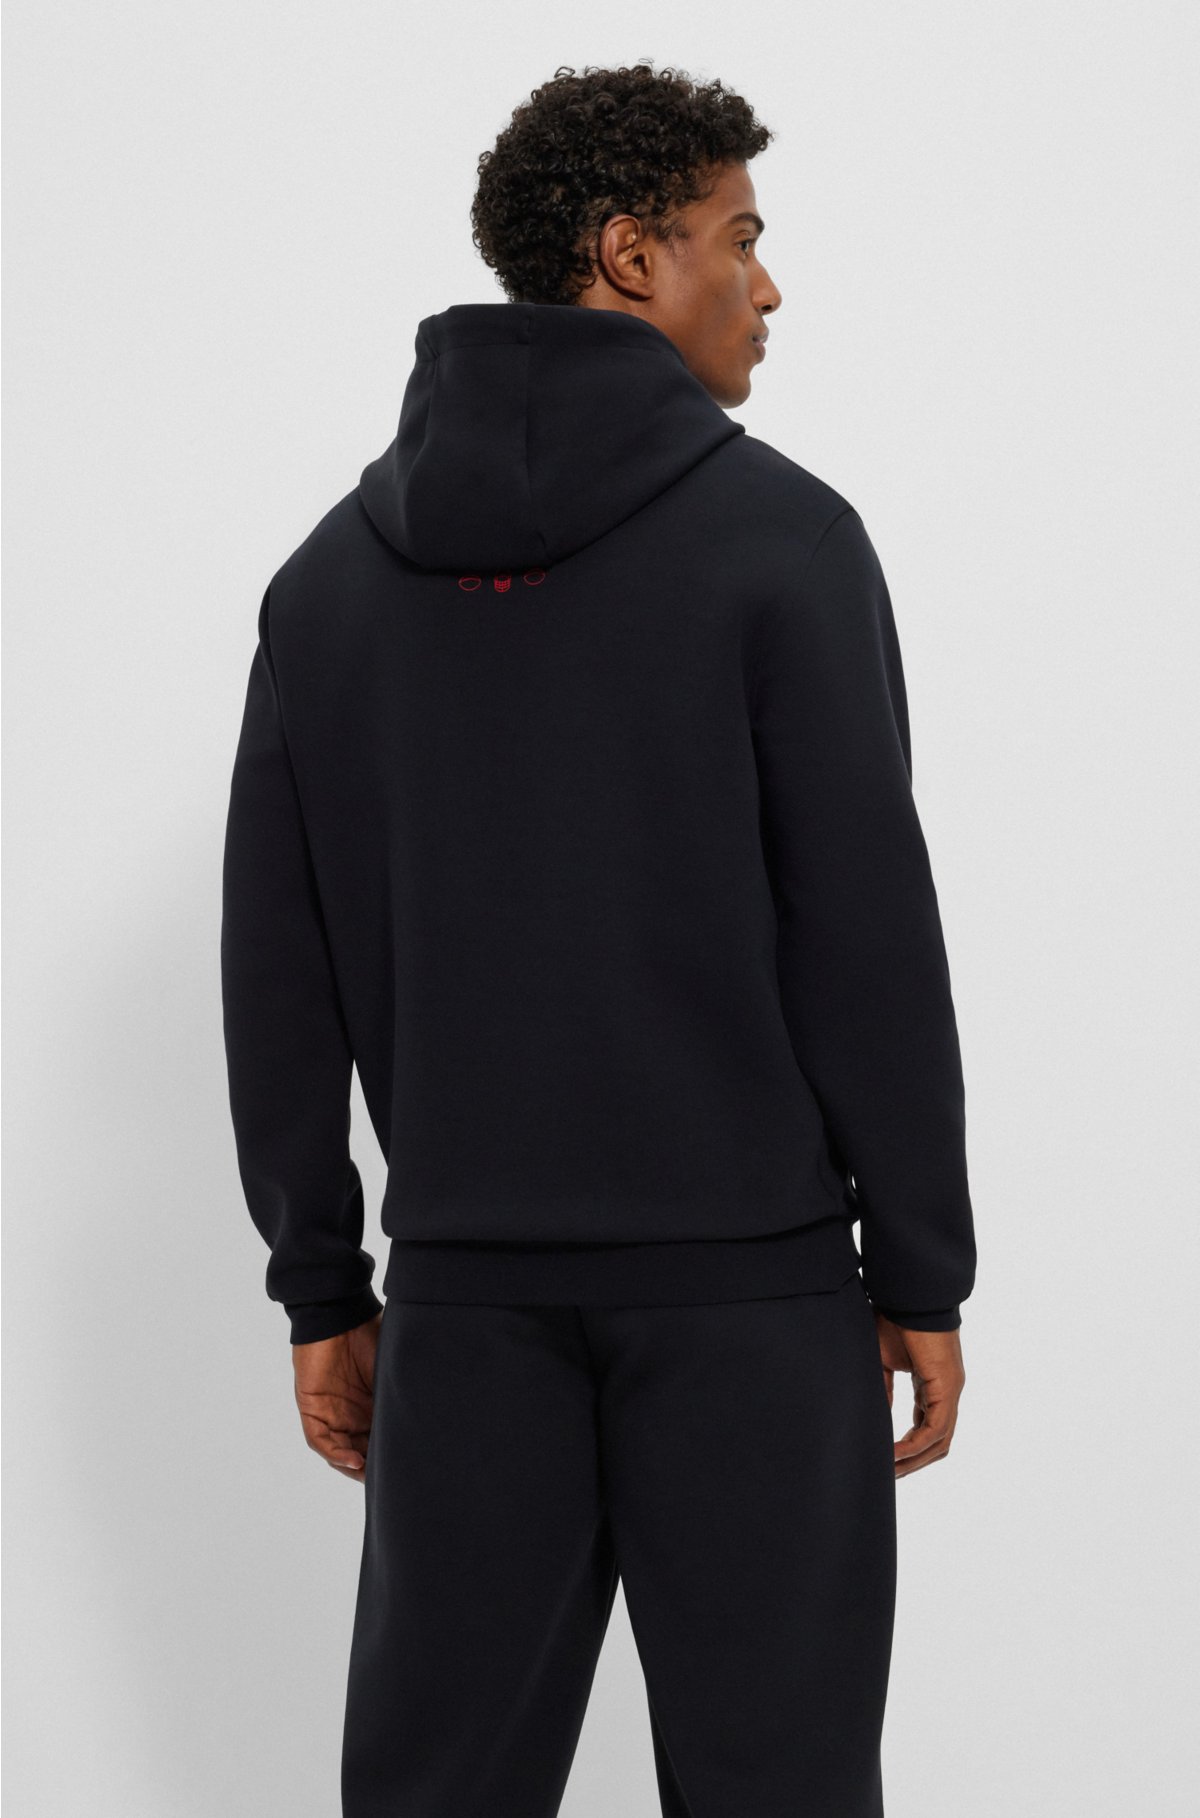  BOSS x NFL cotton-blend hoodie with collaborative branding, Bucs